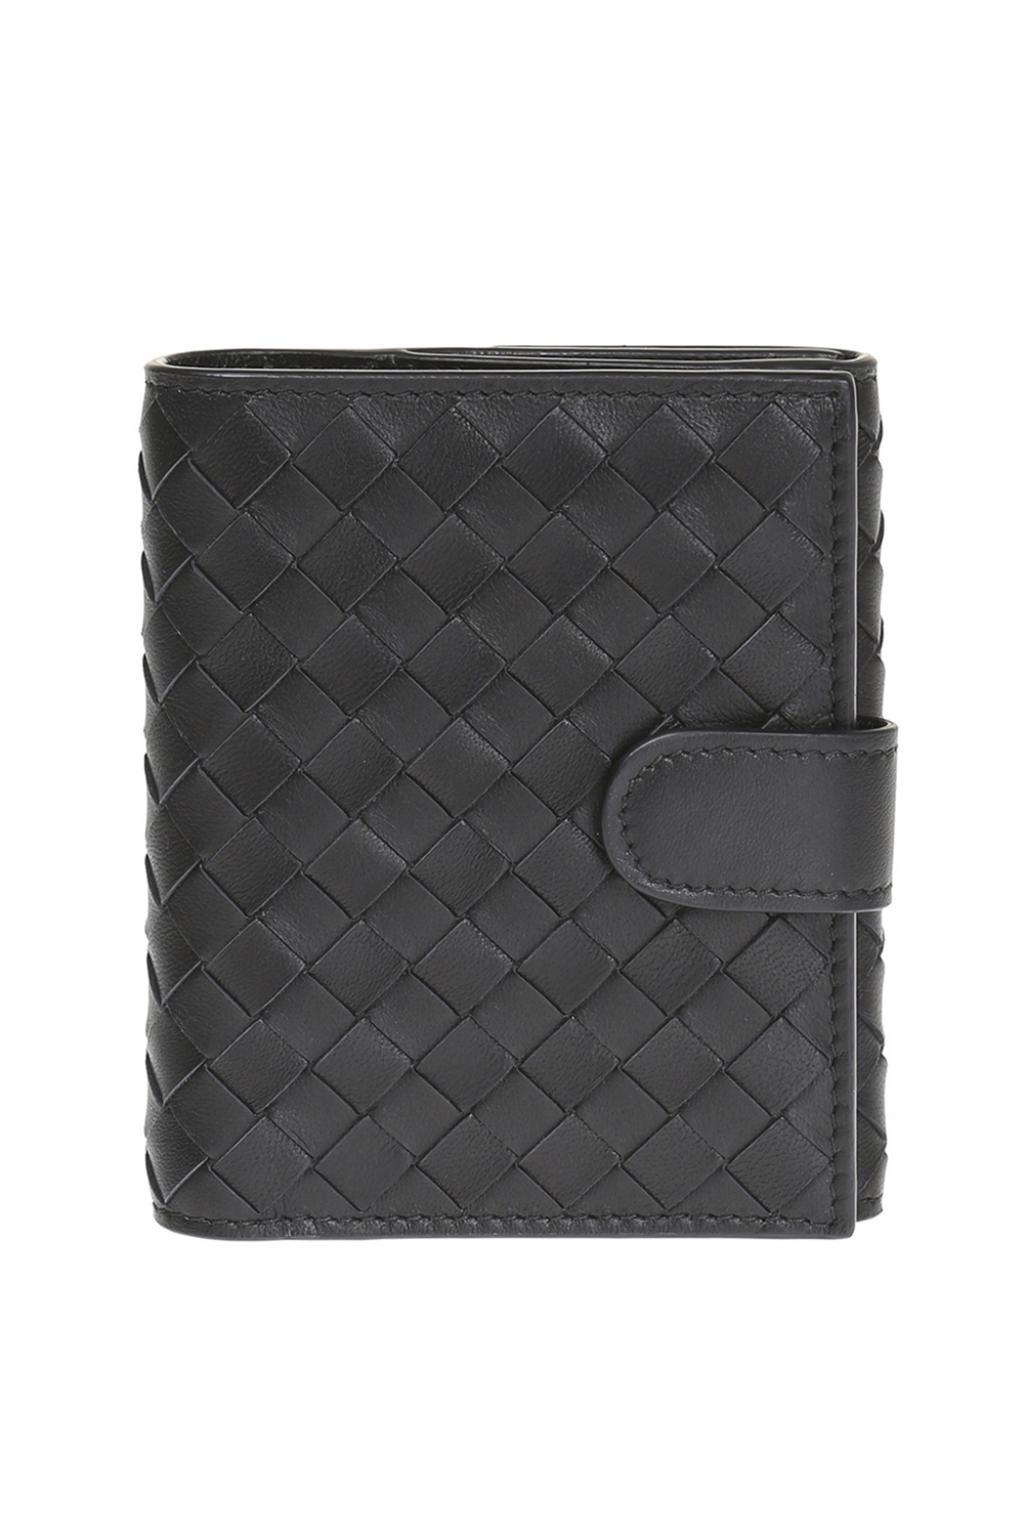 Bottega Veneta Leather Wallet in Black - Save 53% - Lyst